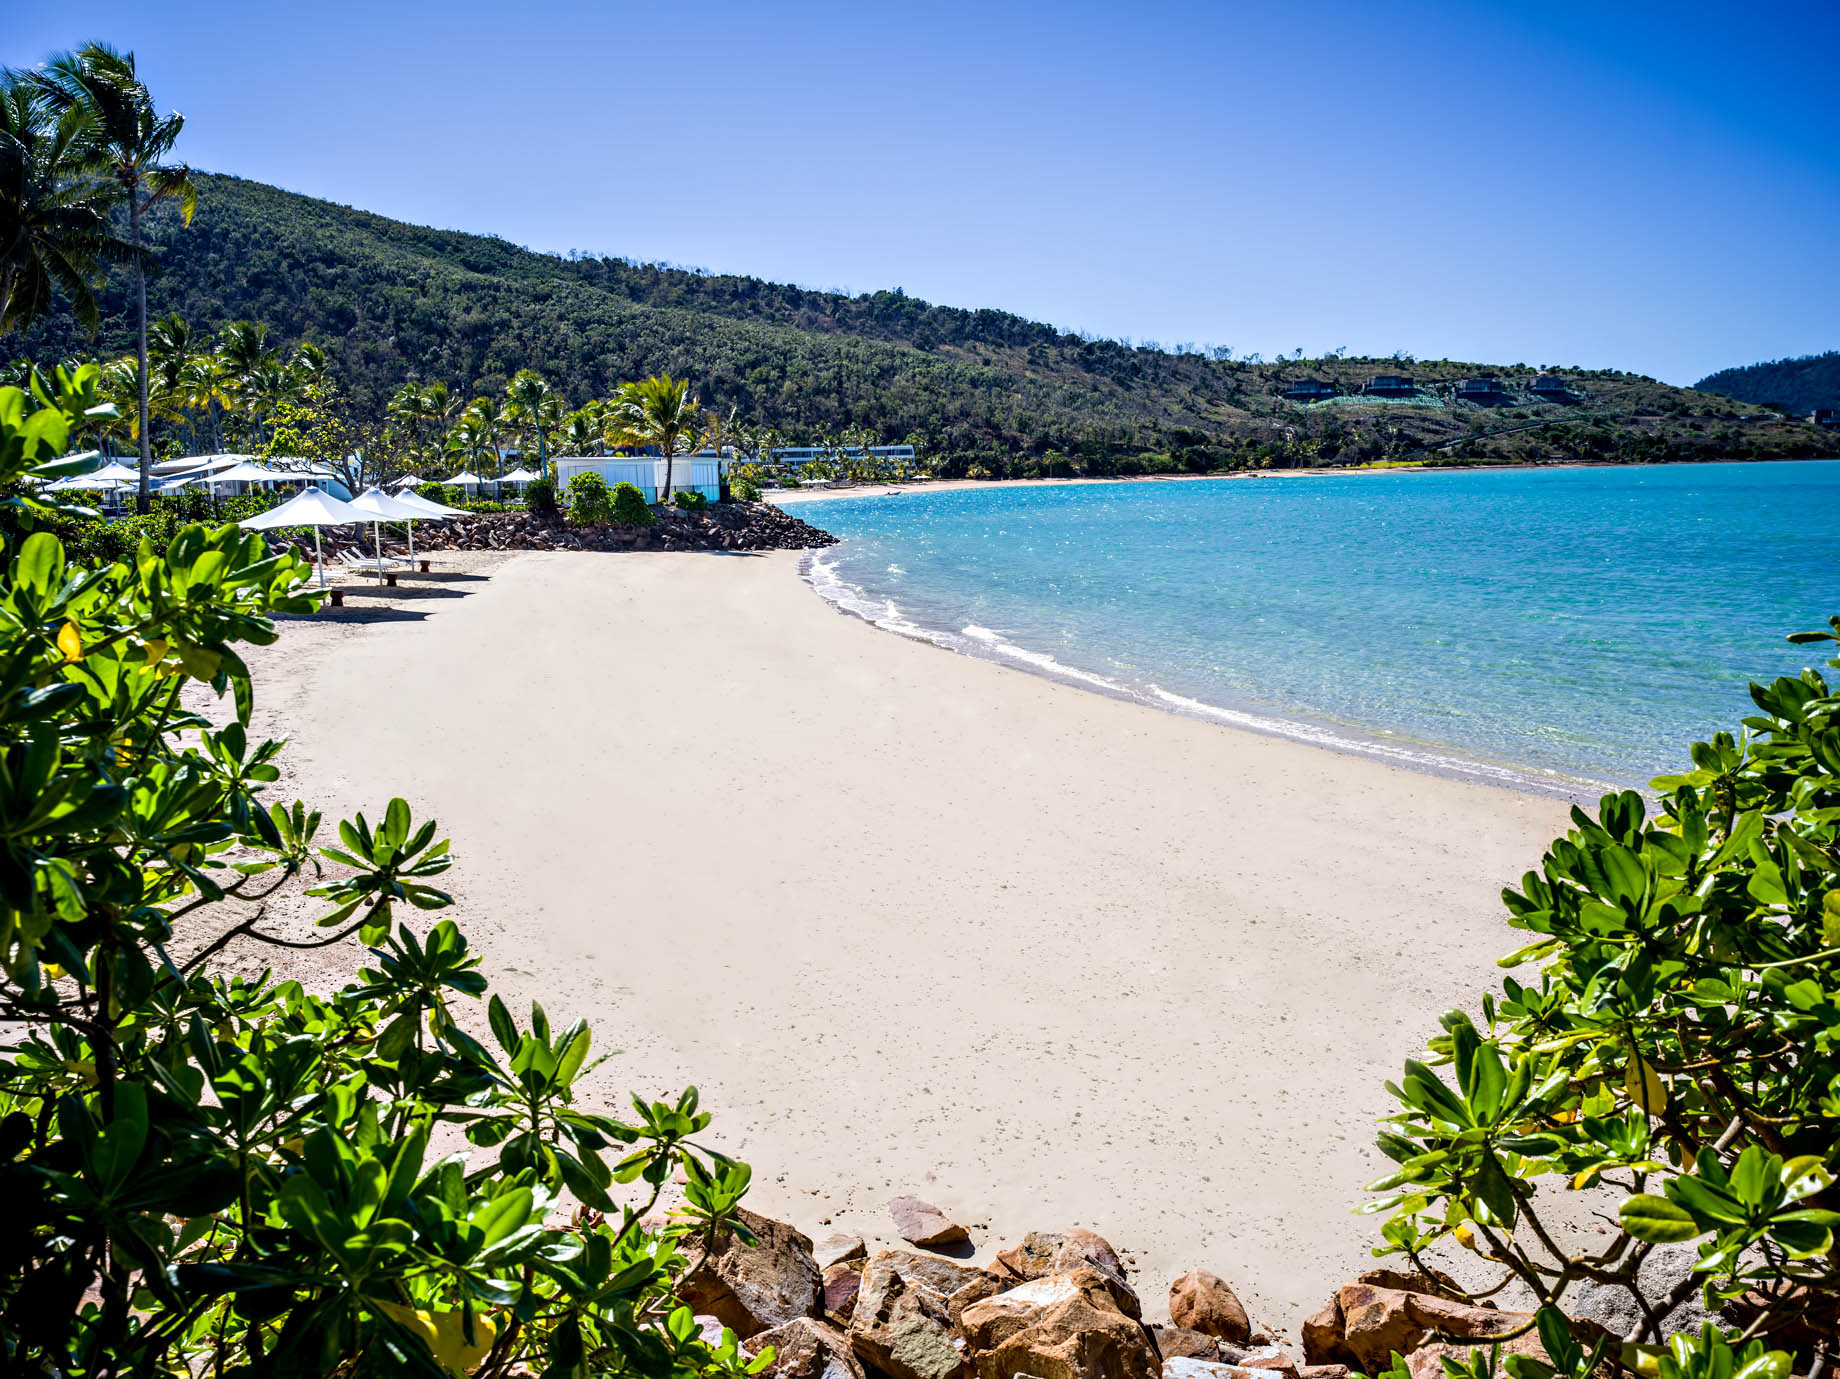 InterContinental Hayman Island Resort – Whitsunday Islands, Australia – Coconut Beach Resort View